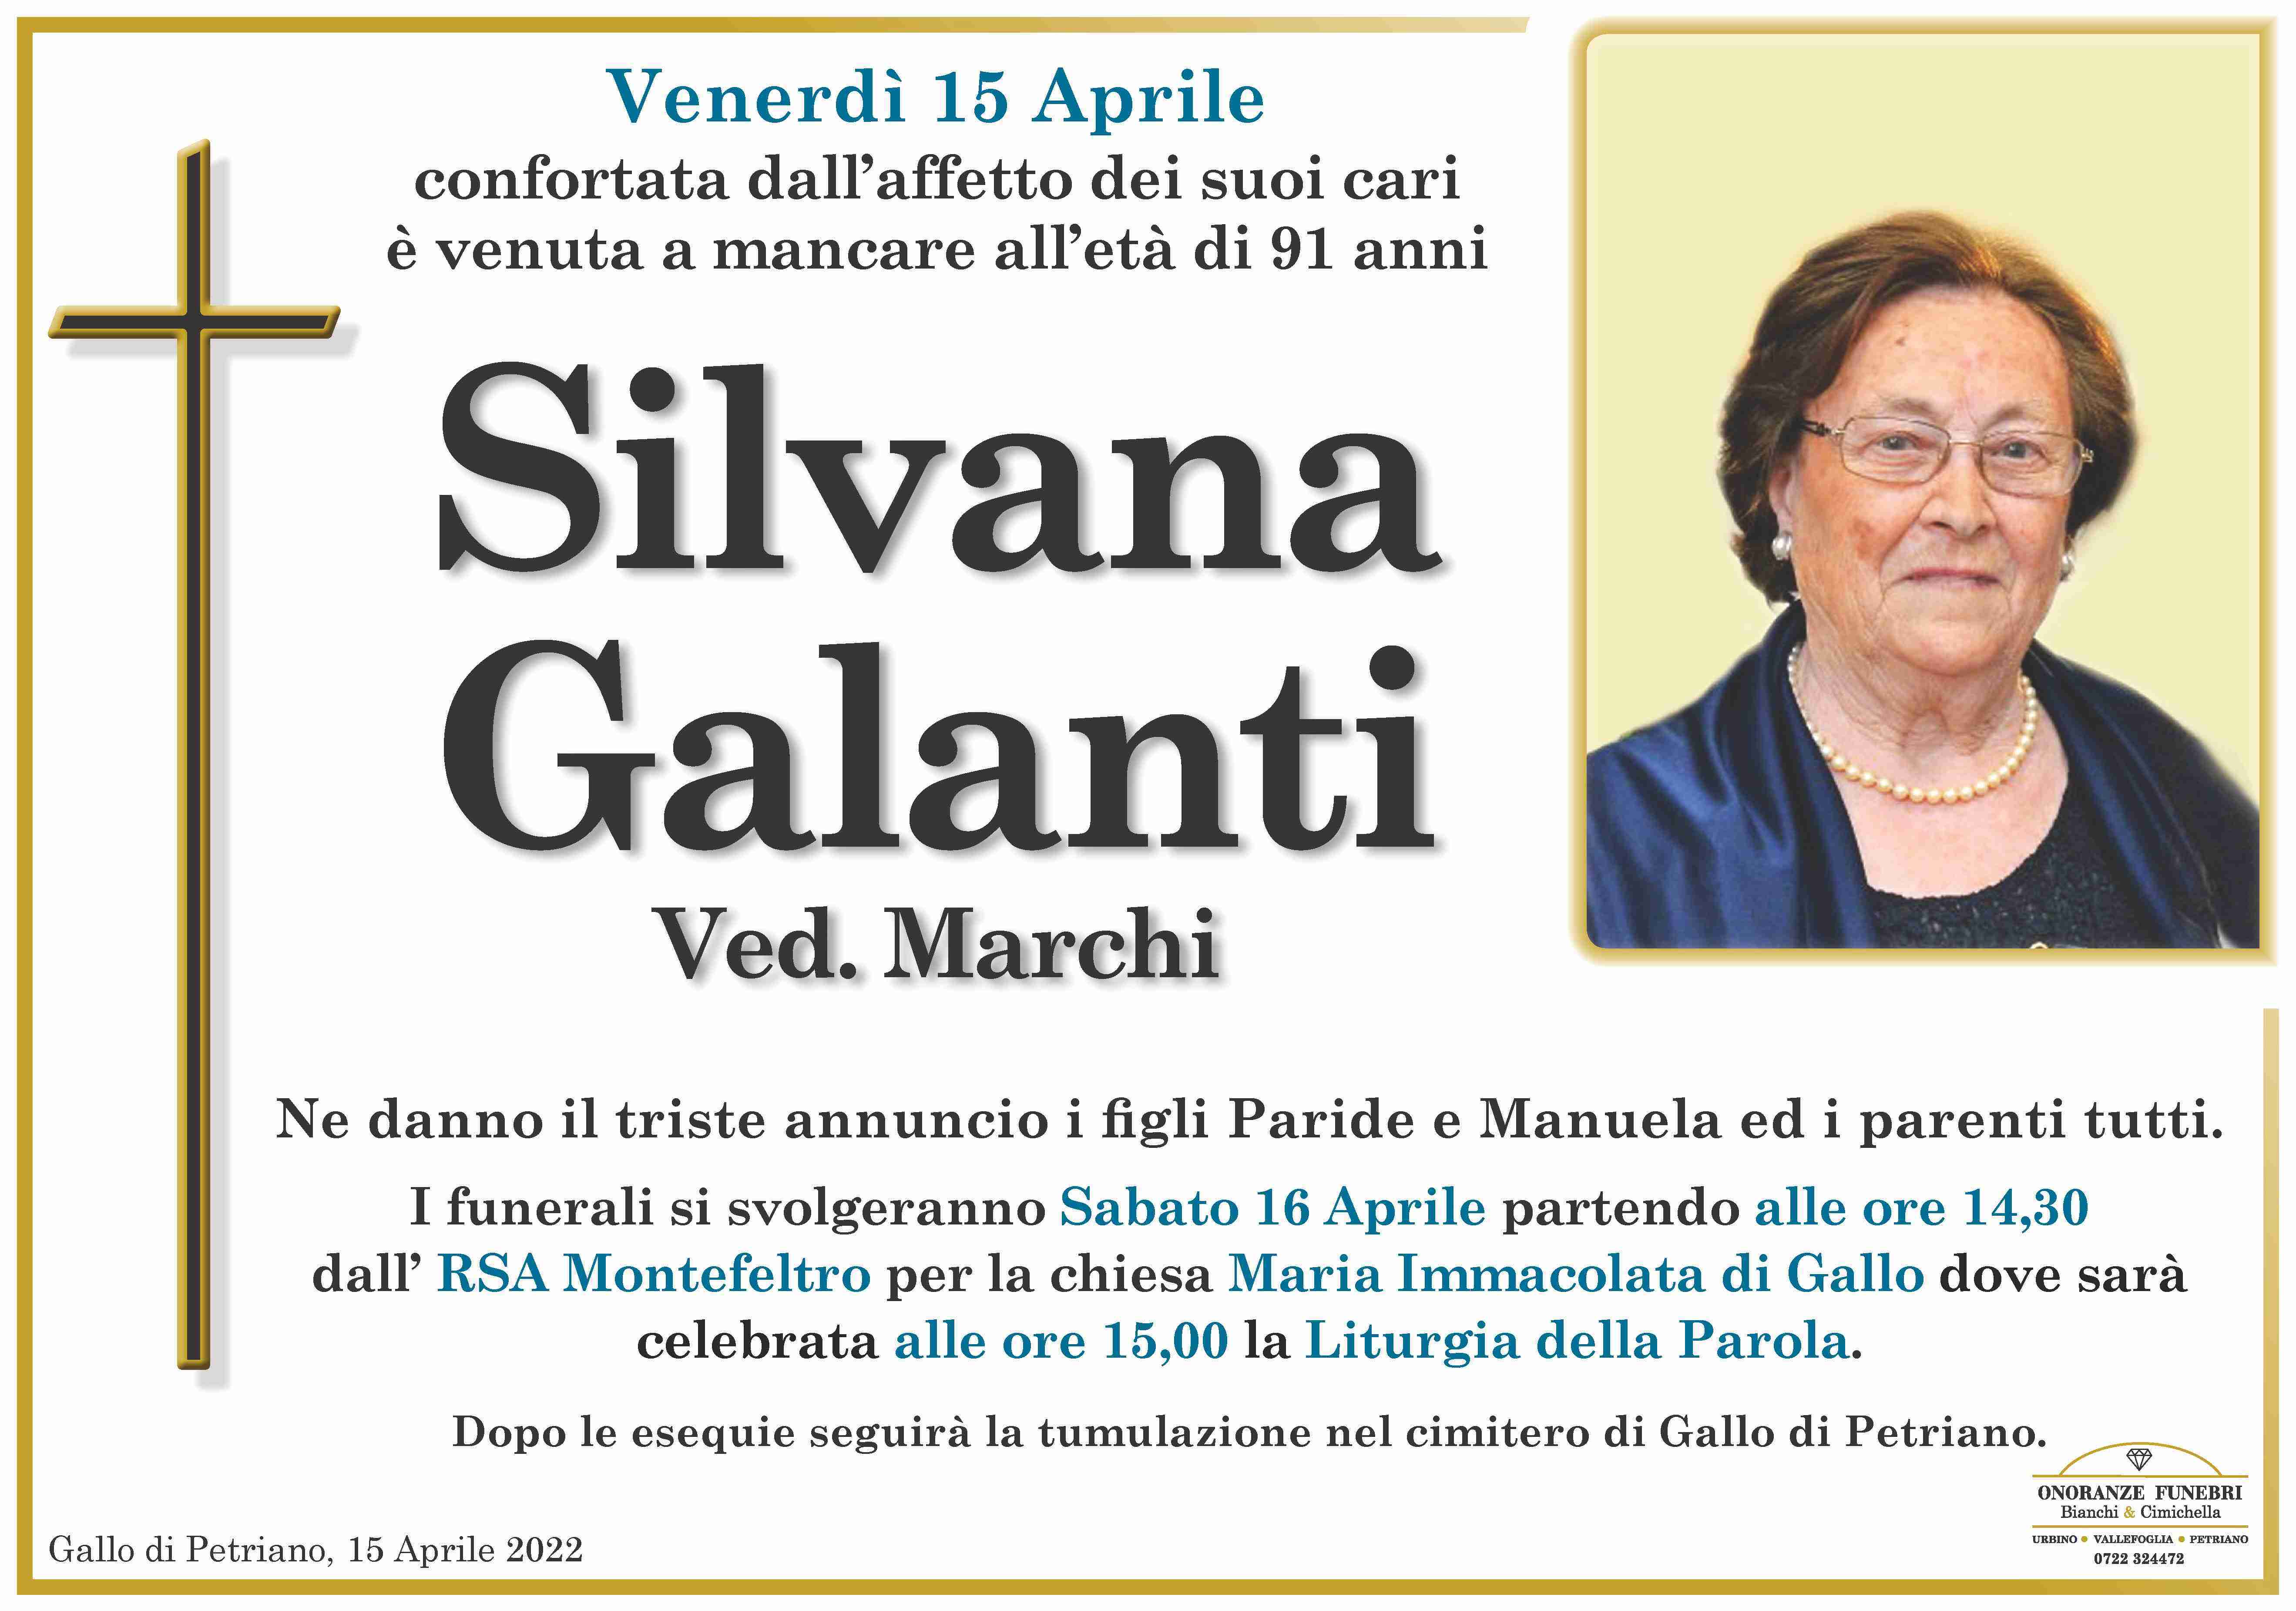 Silvana Galanti